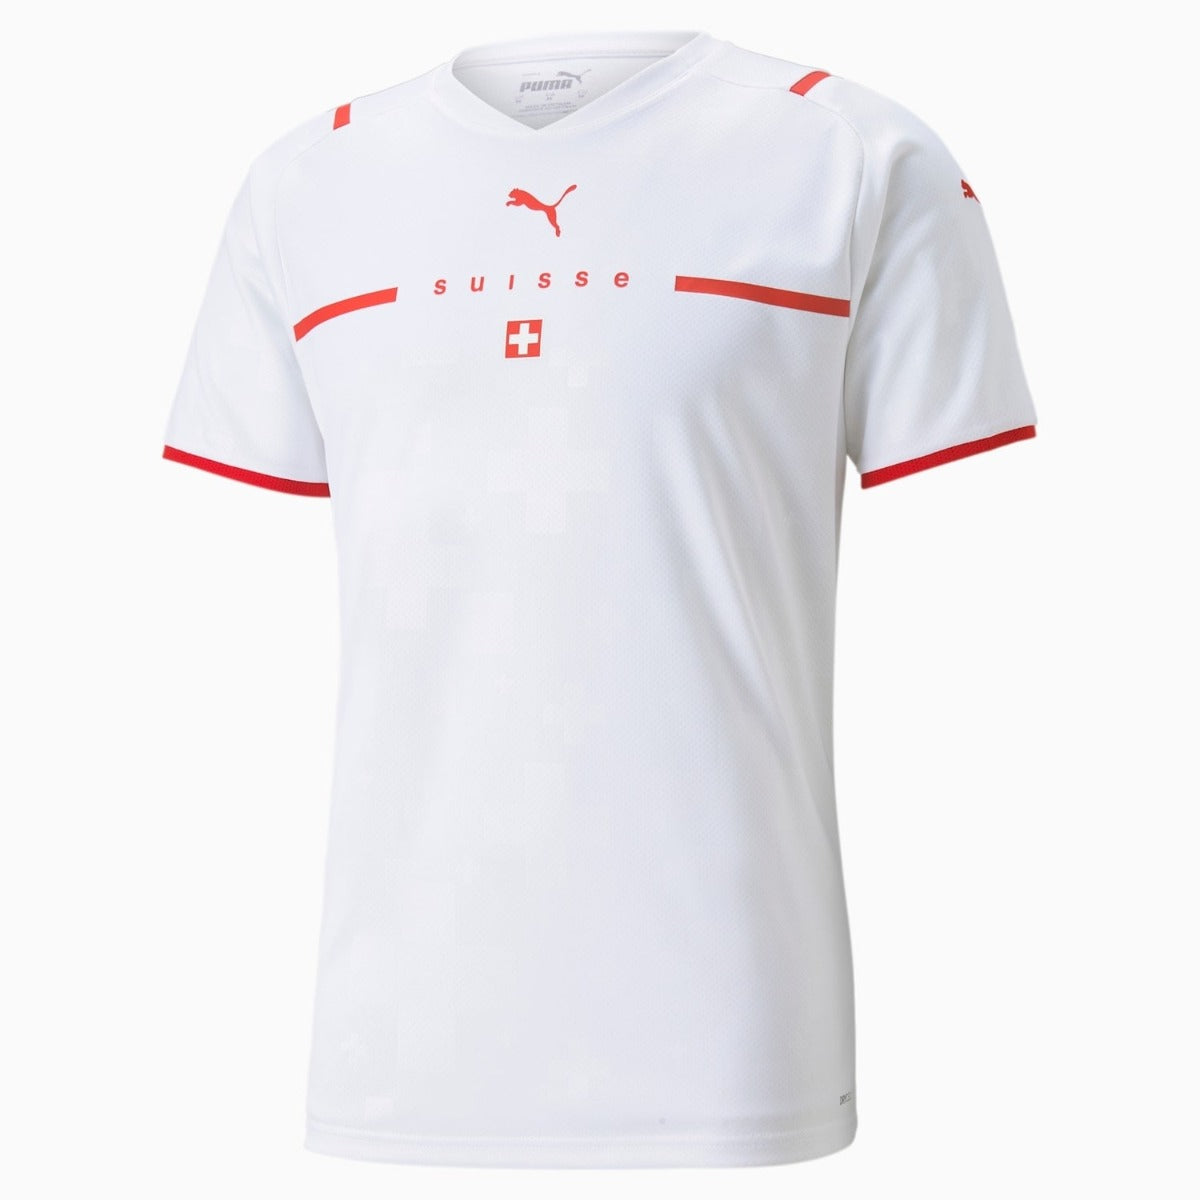 Puma 2021-22 Switzerland Away Jersey - White Red (Front)